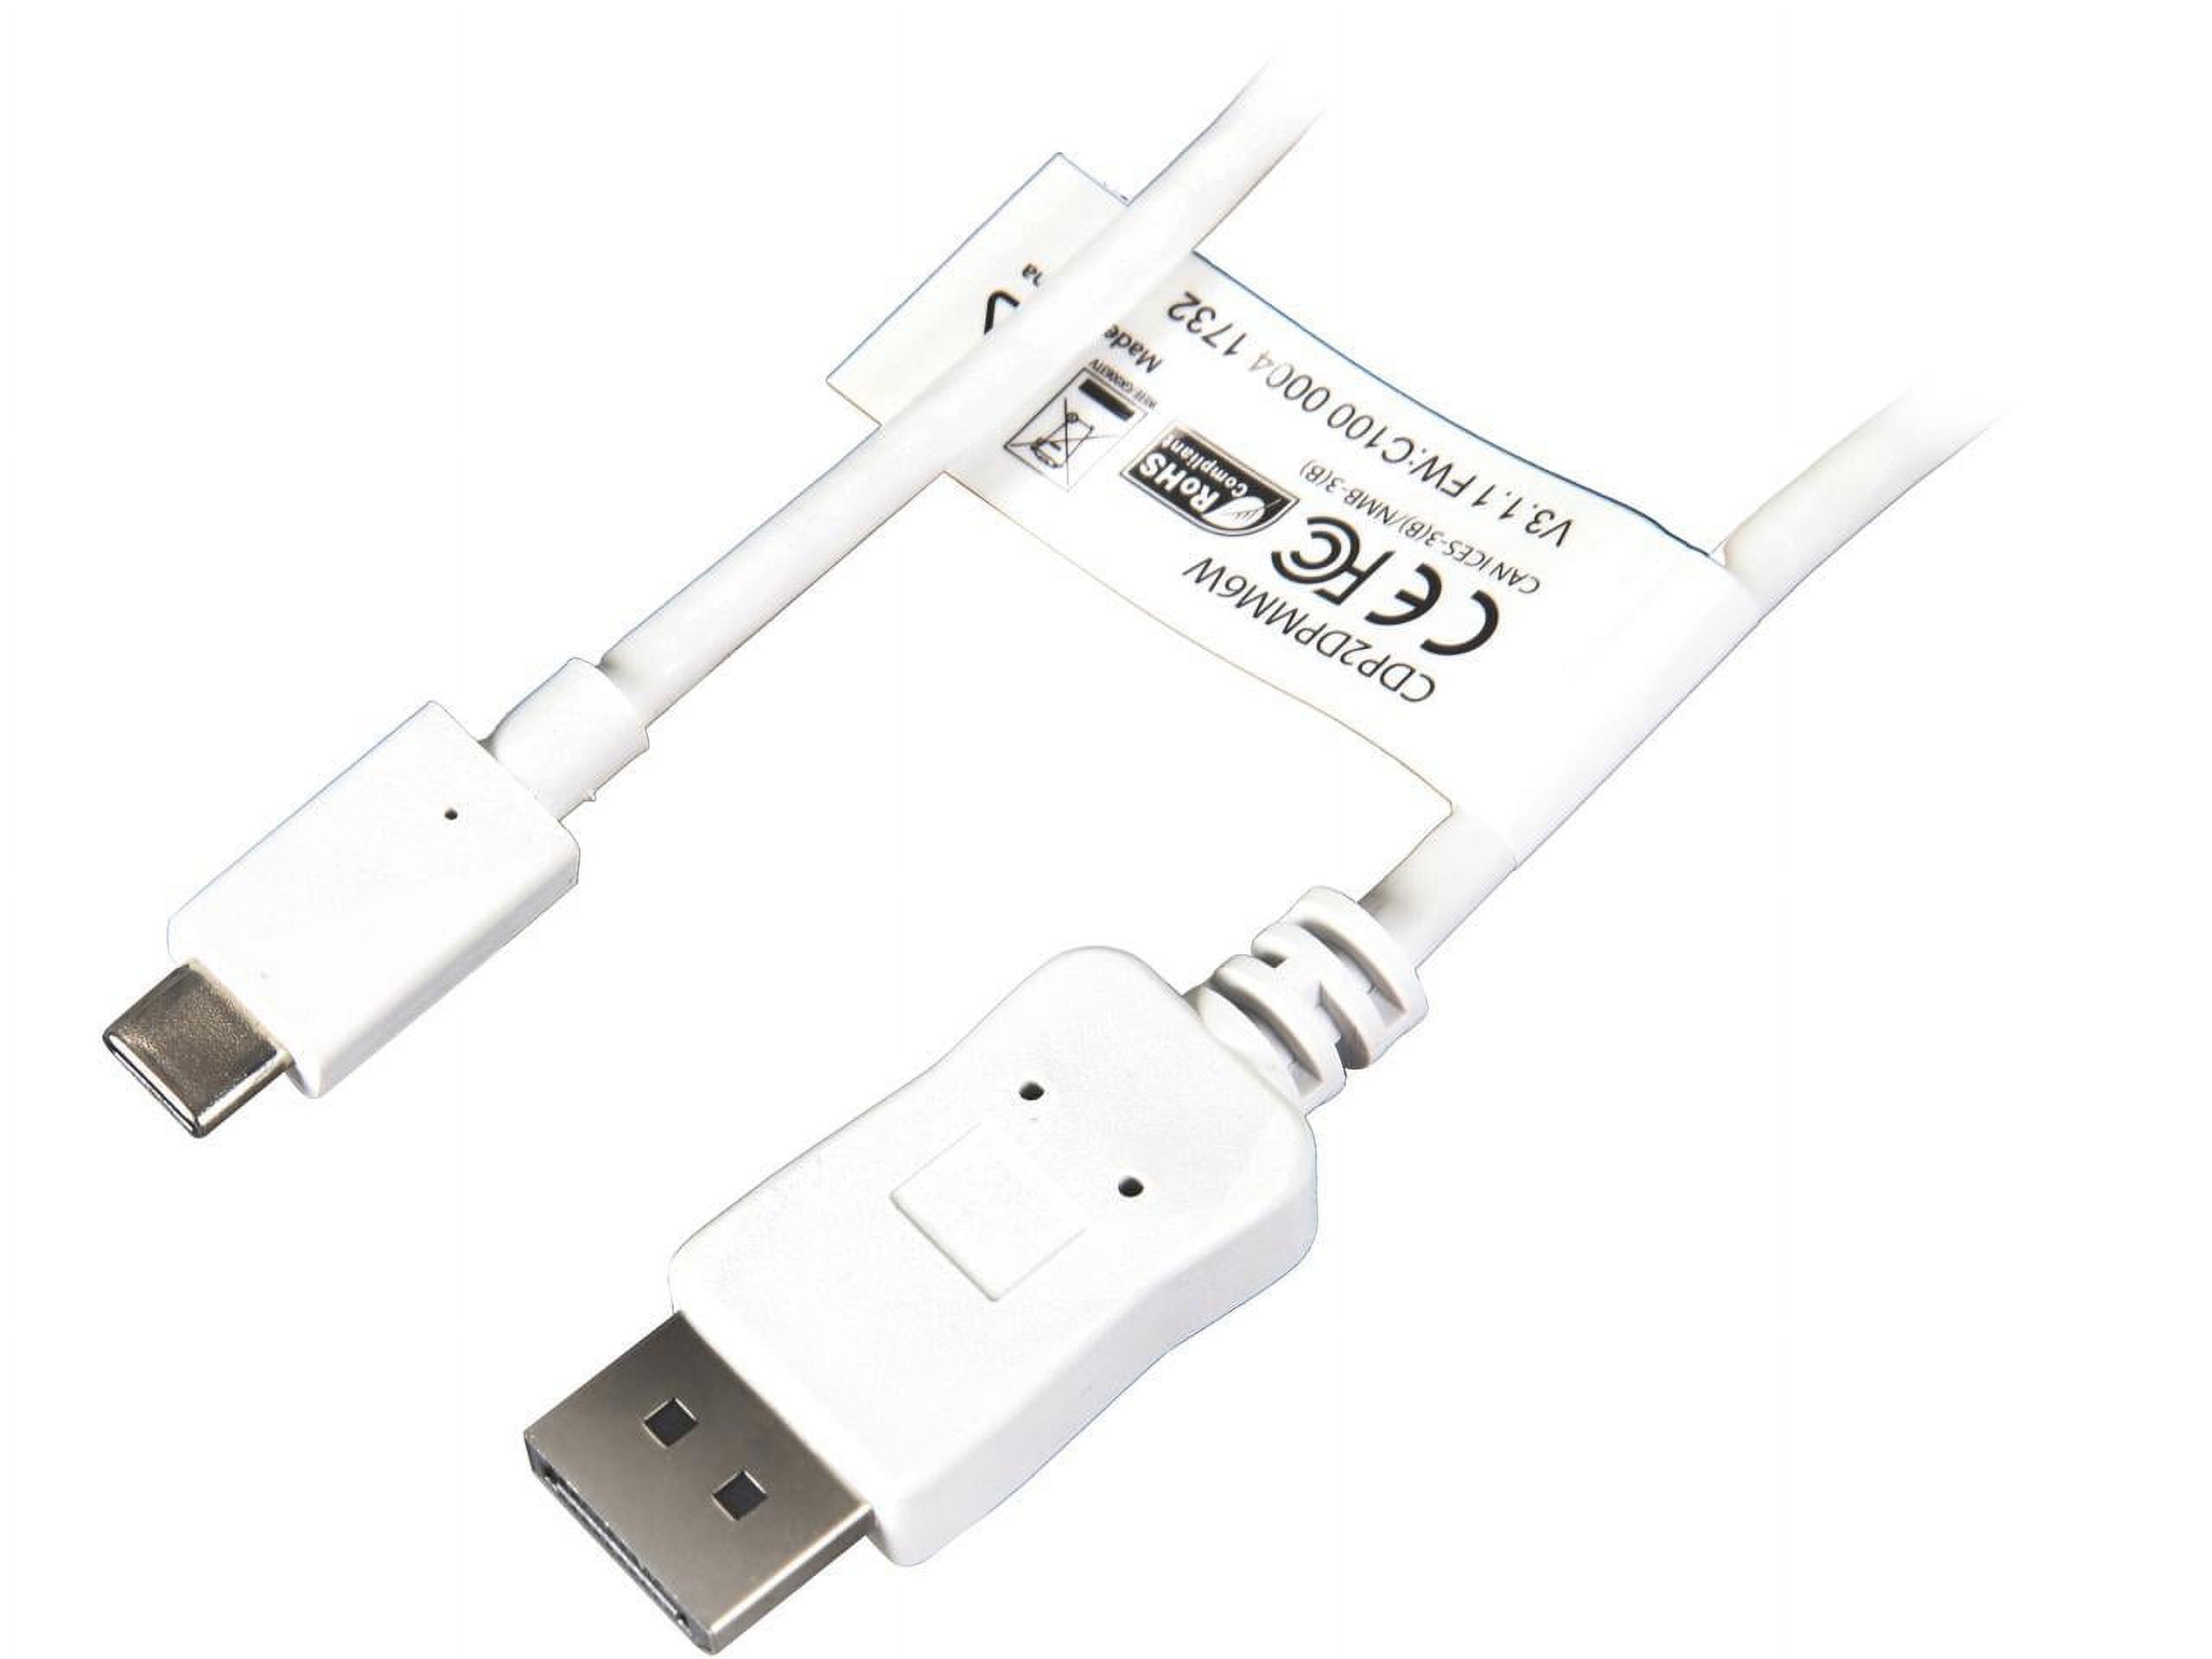 StarTech.com CDP2DPMM6W 6ft USB C to DisplayPort Cable - White - 4K 60Hz DisplayPort Cable - USB Type C to DisplayPort Adapter (CDP2DPMM6W) - image 1 of 3